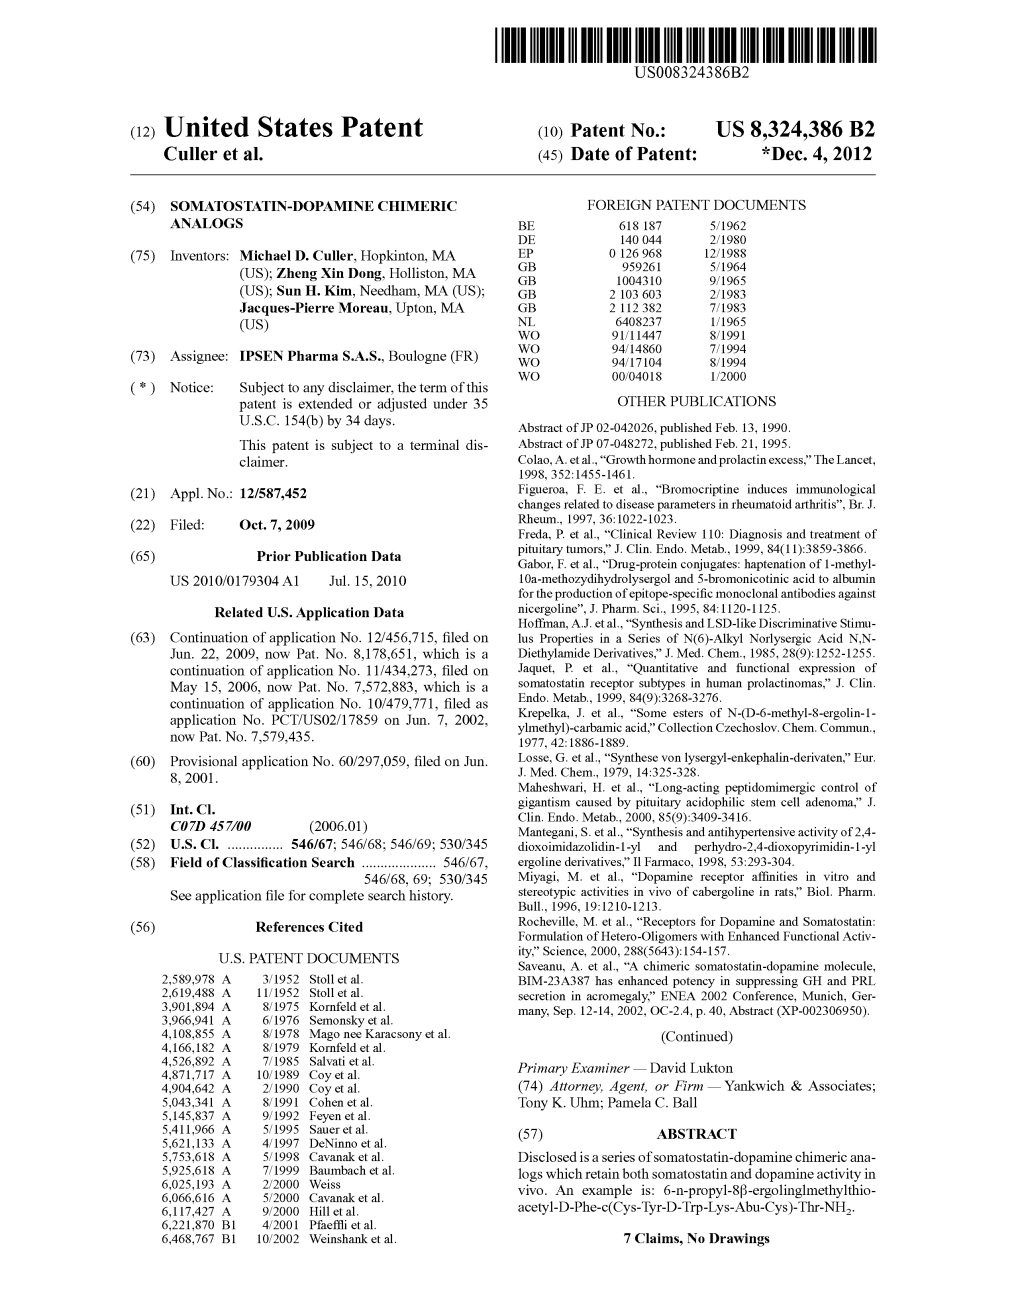 (12) United States Patent (10) Patent No.: US 8,324,386 B2 Culler Et Al